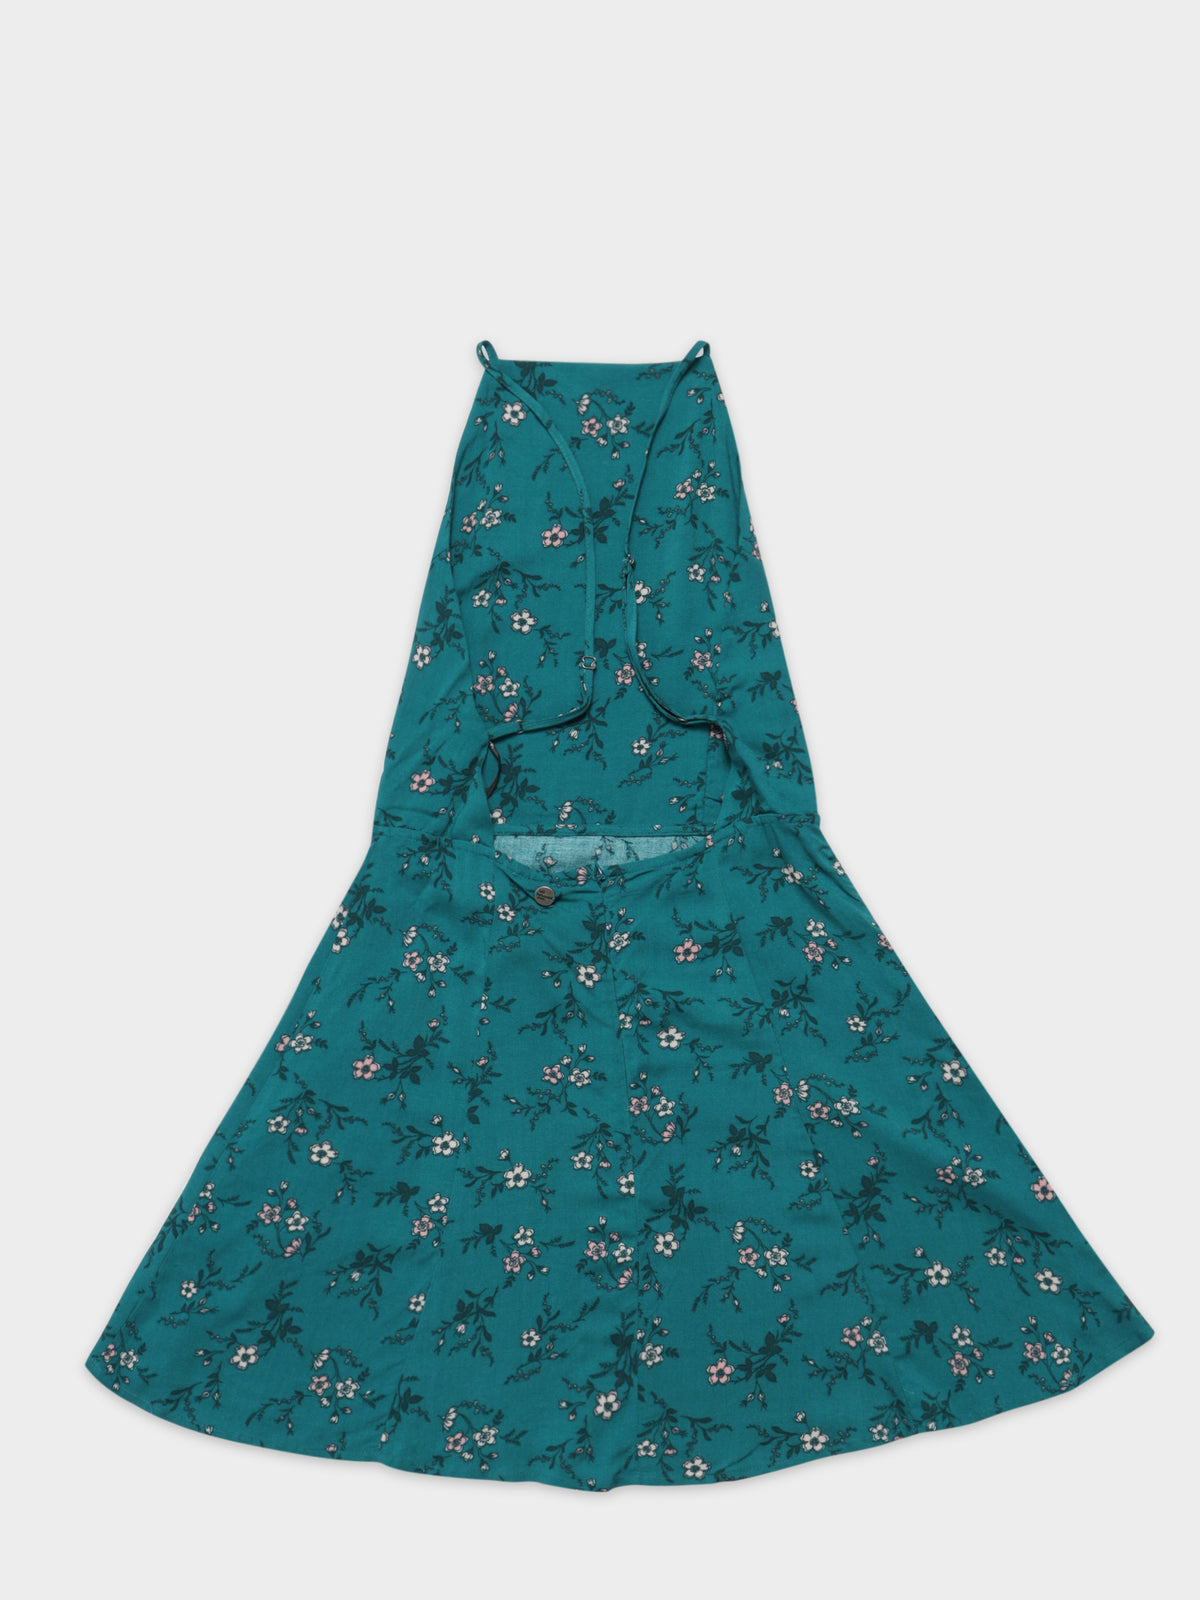 Garden Dress in Teal Floral Print